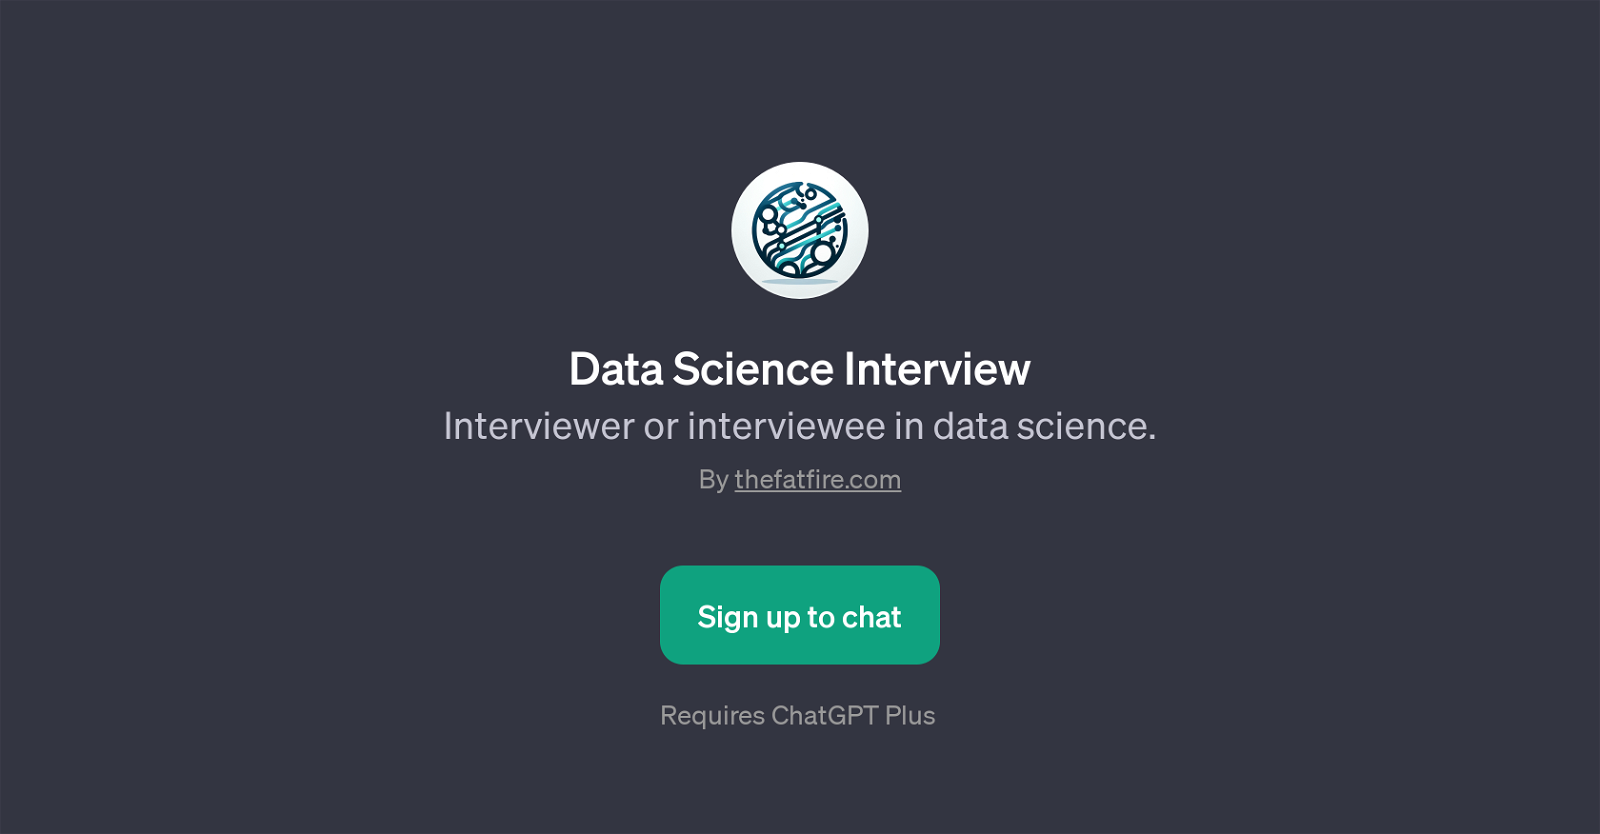 Data Science Interview website